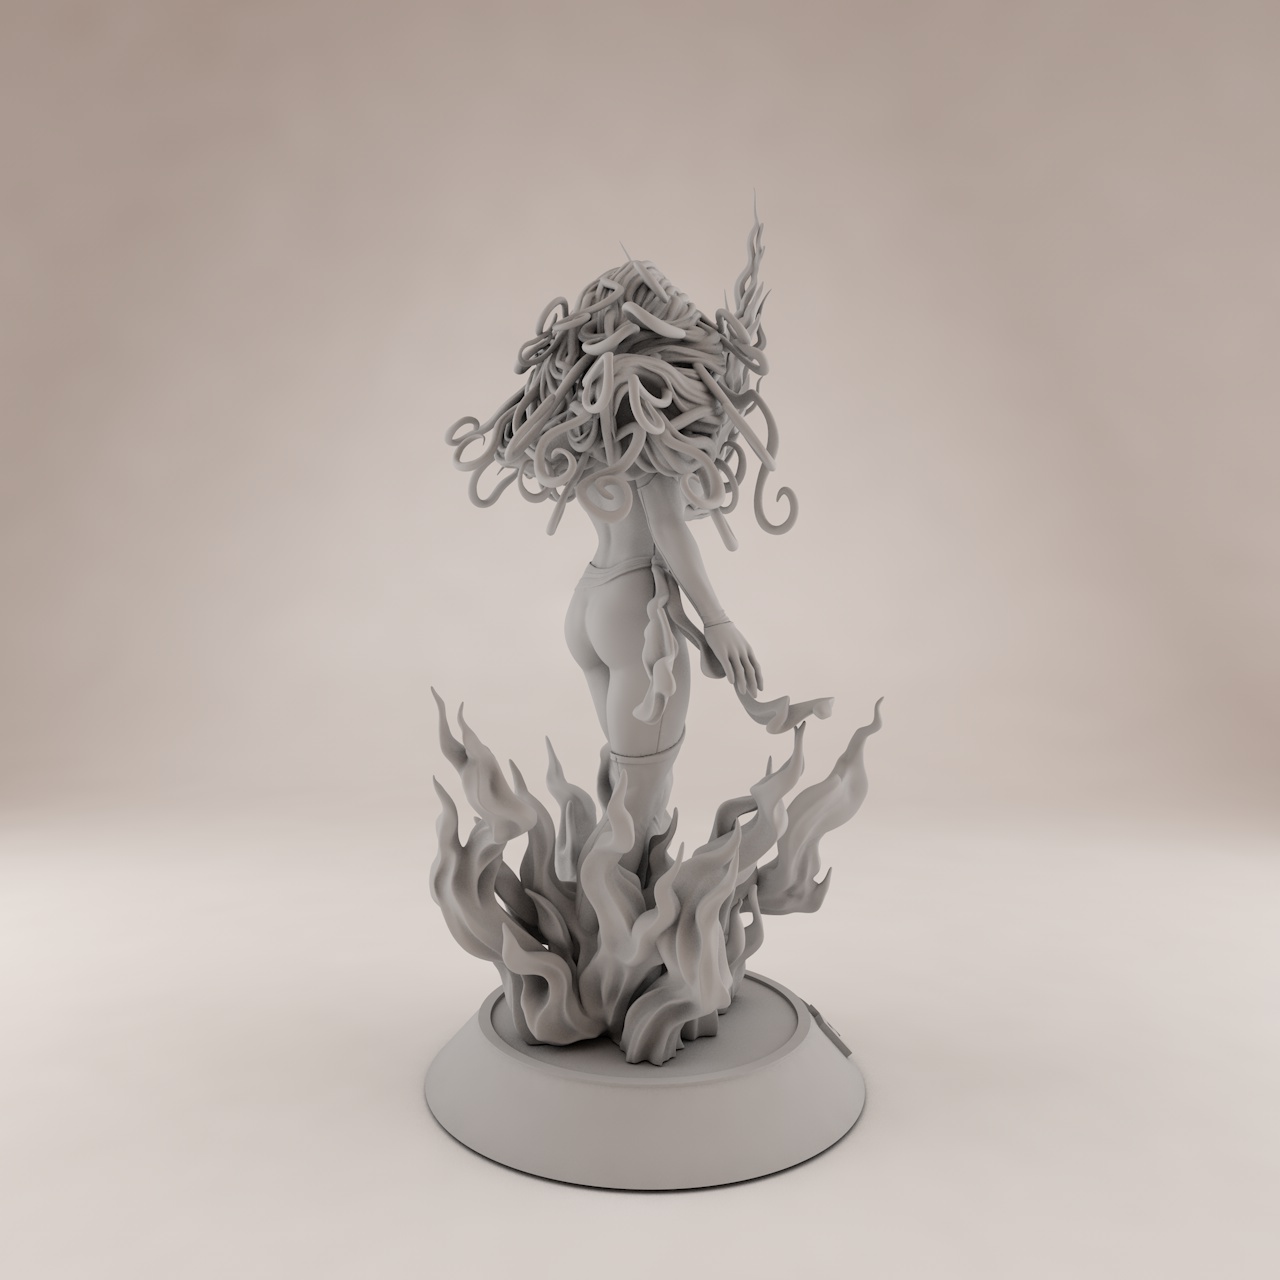 Phoenix Xmen 3D印刷モデル